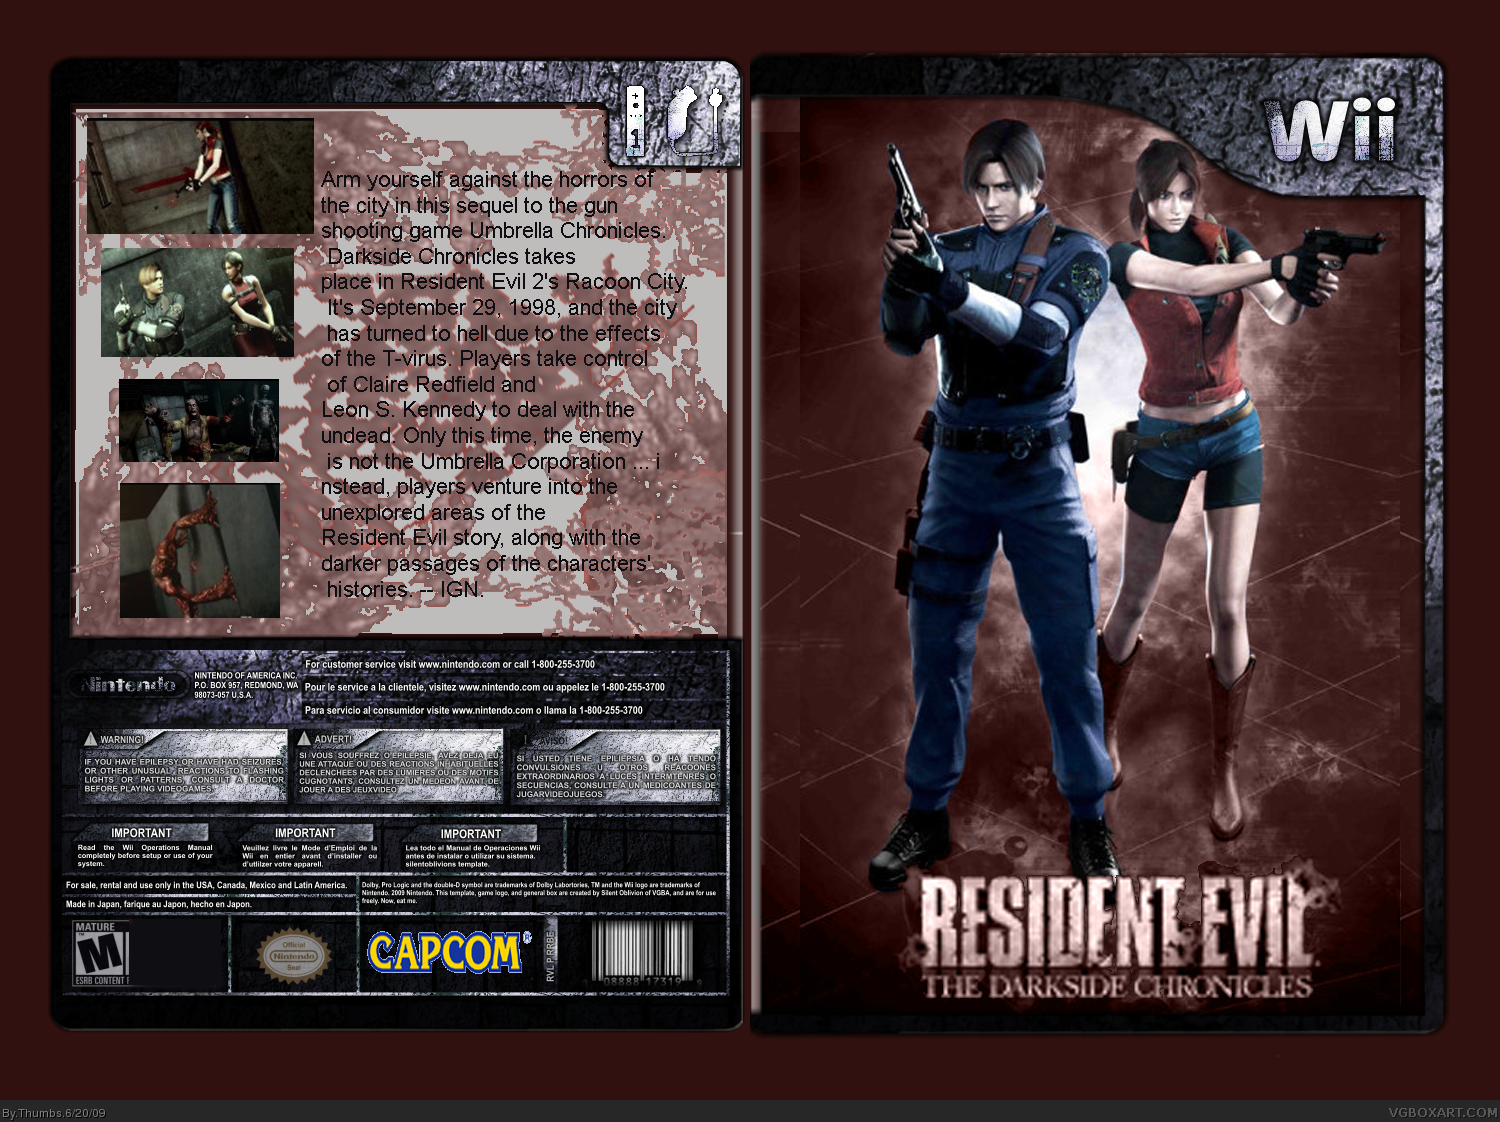 Resident Evil: The Darkside Chronicles box cover